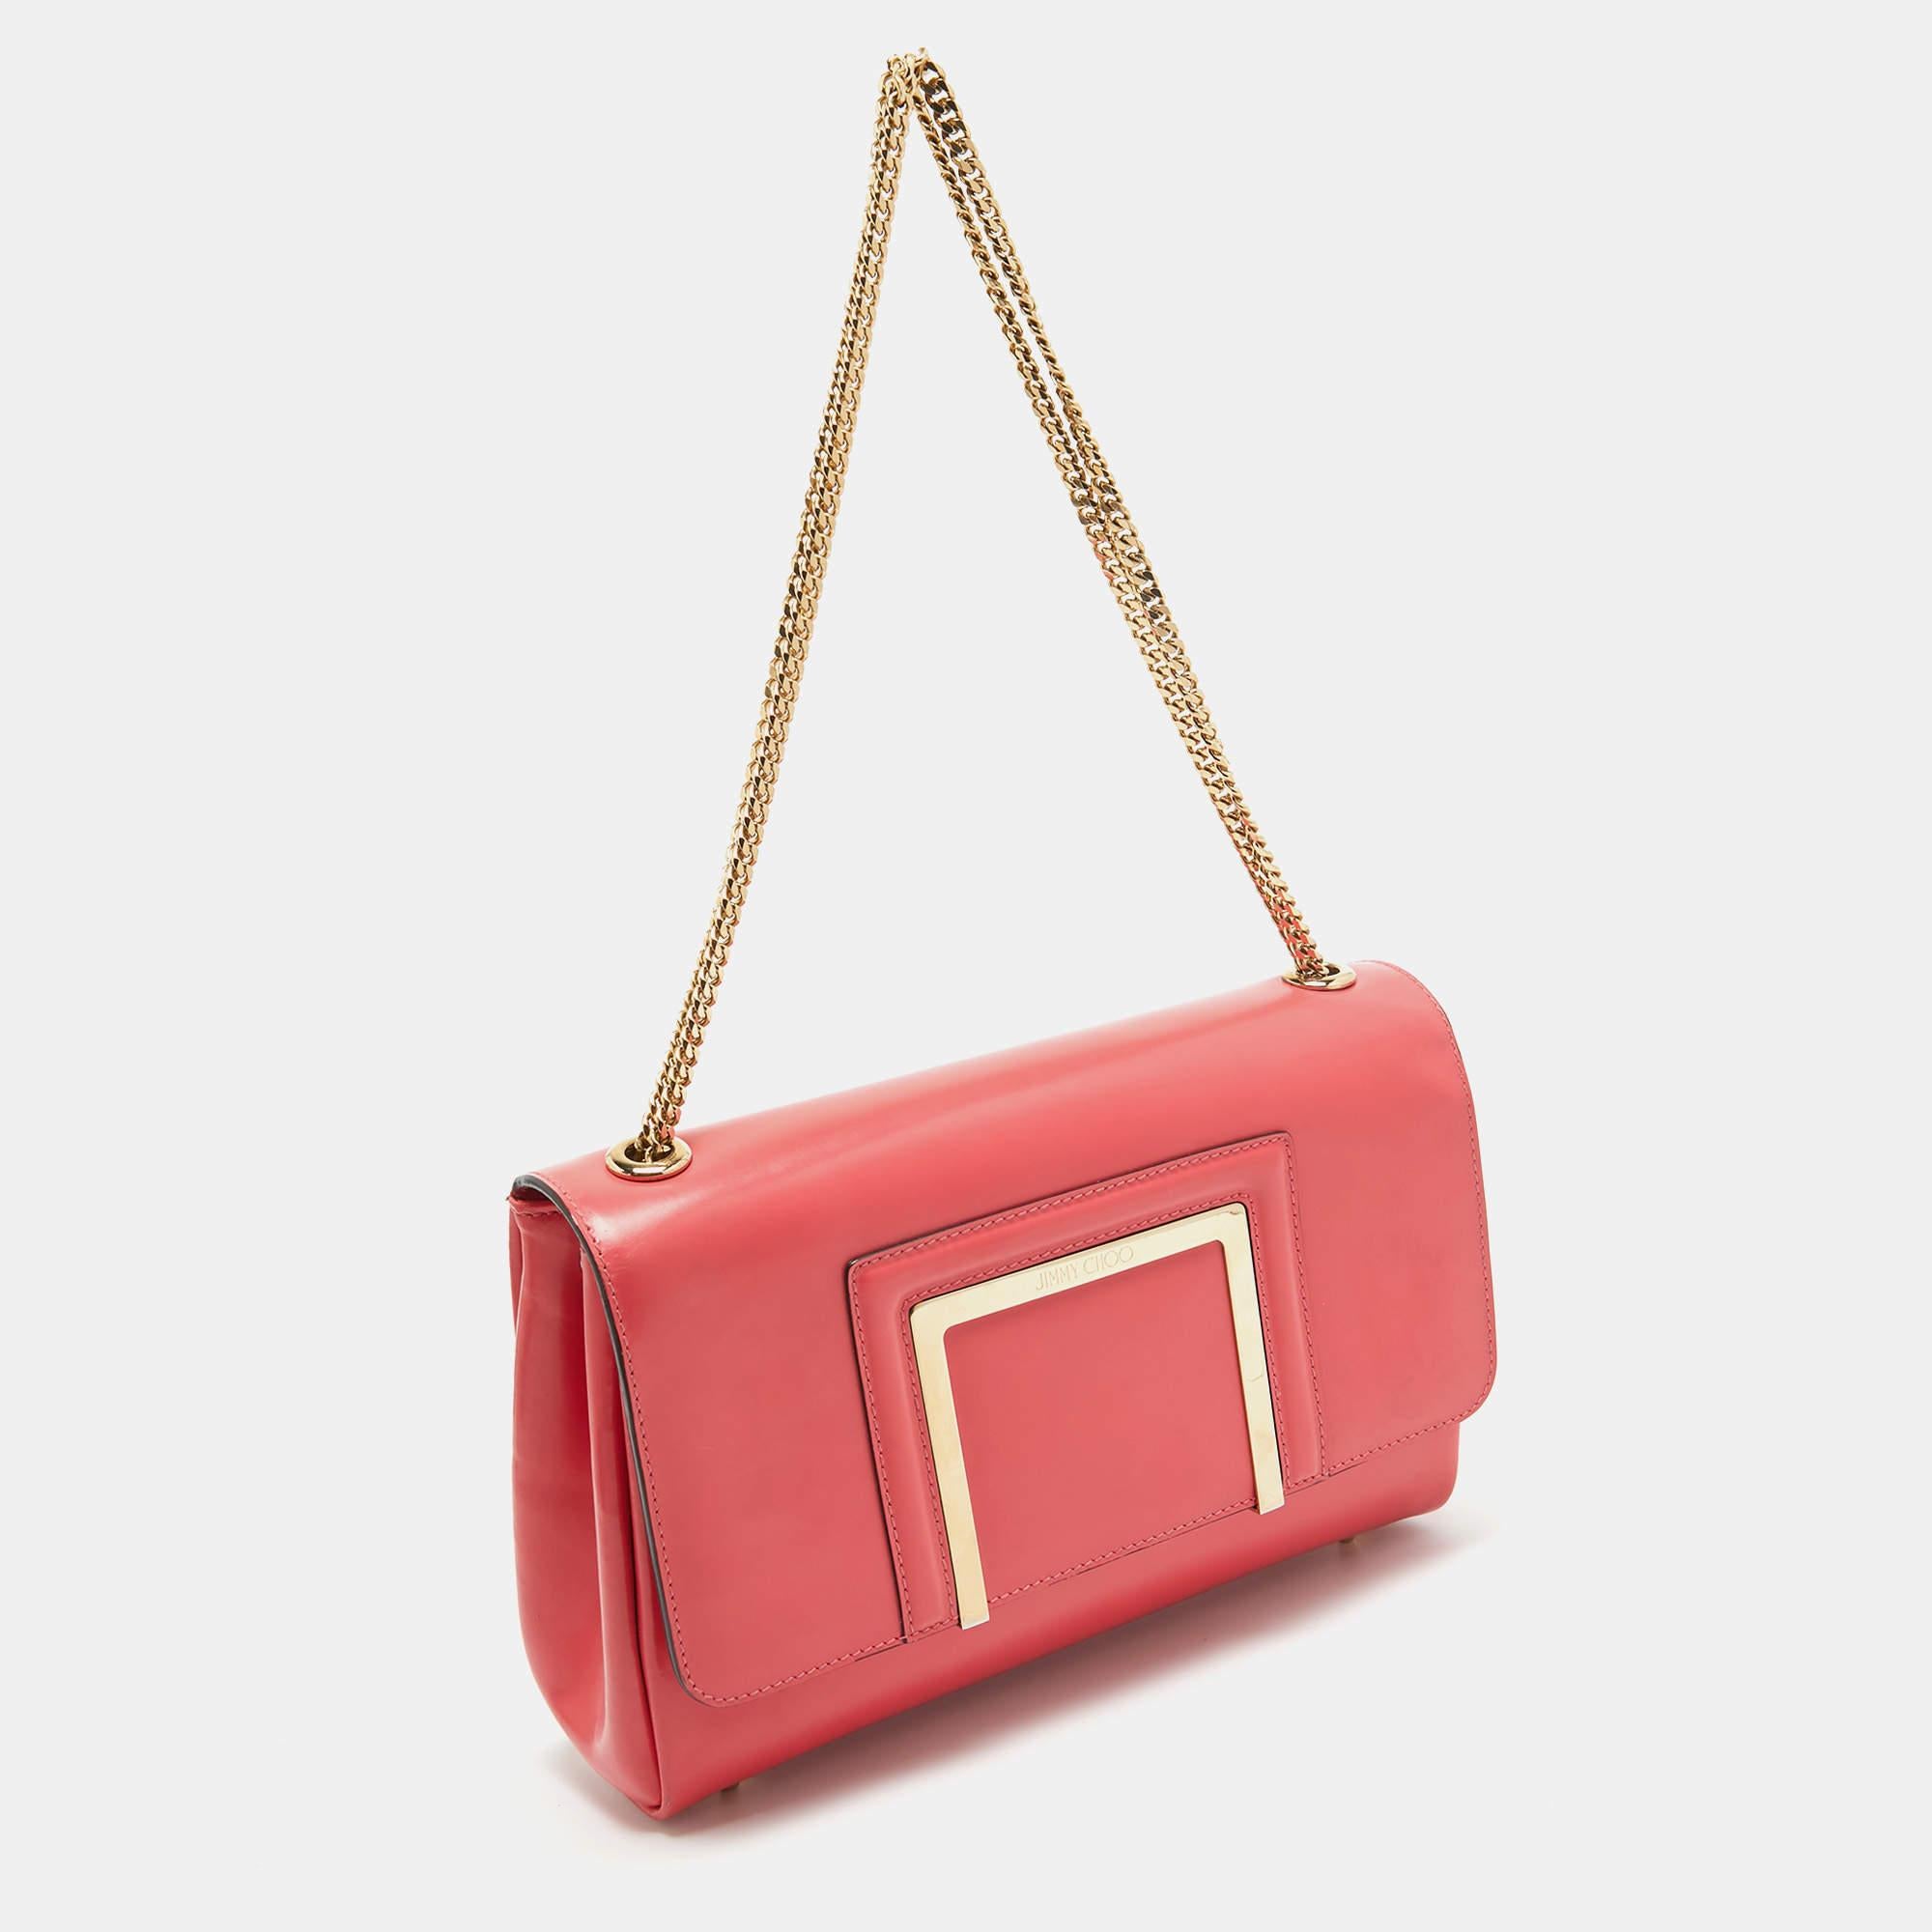 Jimmy Choo Coral Pink Leather Alba Shoulder Bag In Good Condition For Sale In Dubai, Al Qouz 2